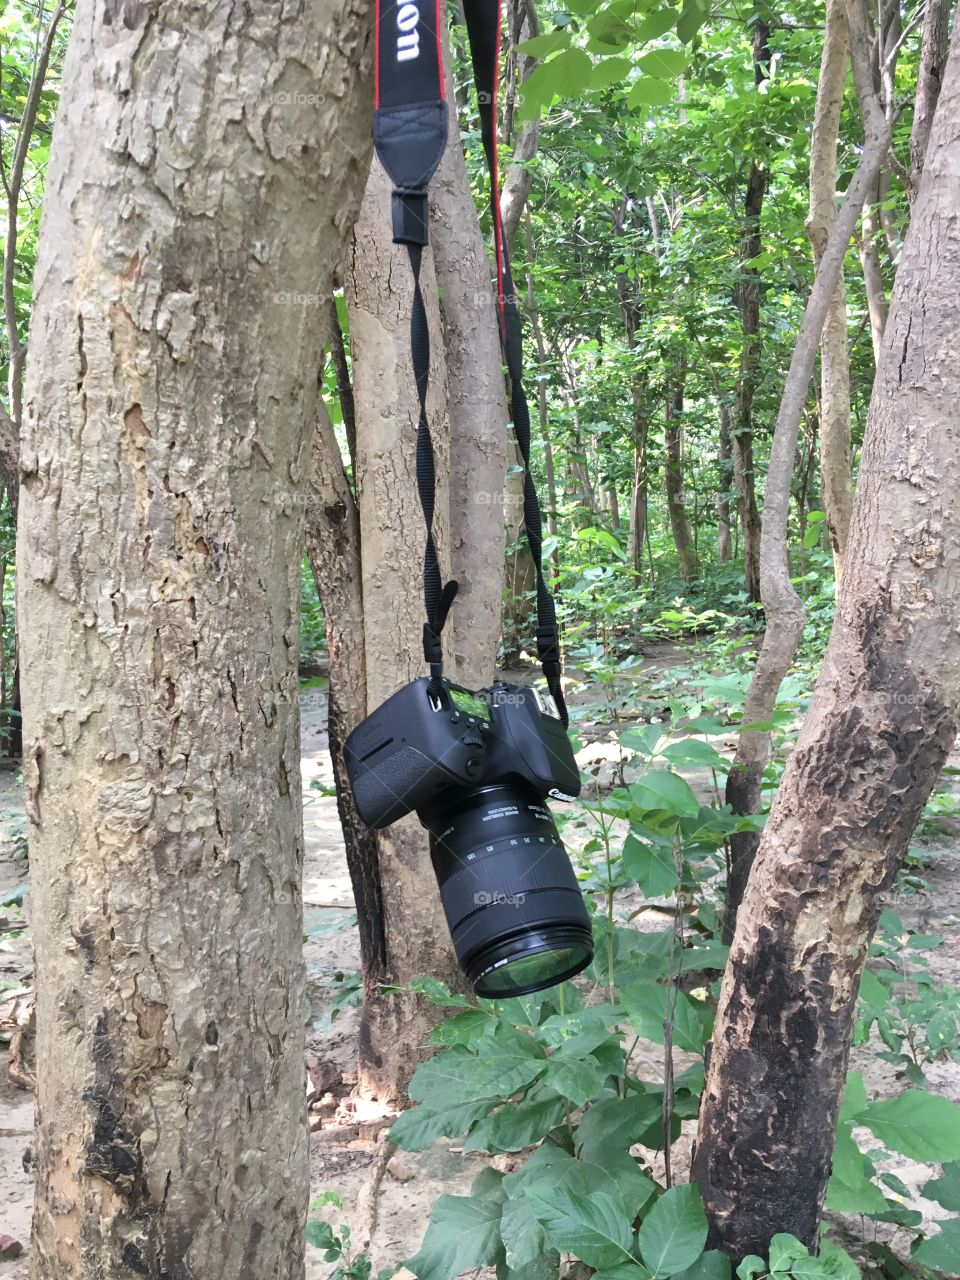 Camera, dslr, canon, canon dslr, black canon dslr camera, camera hanging on the branch, forest , nature